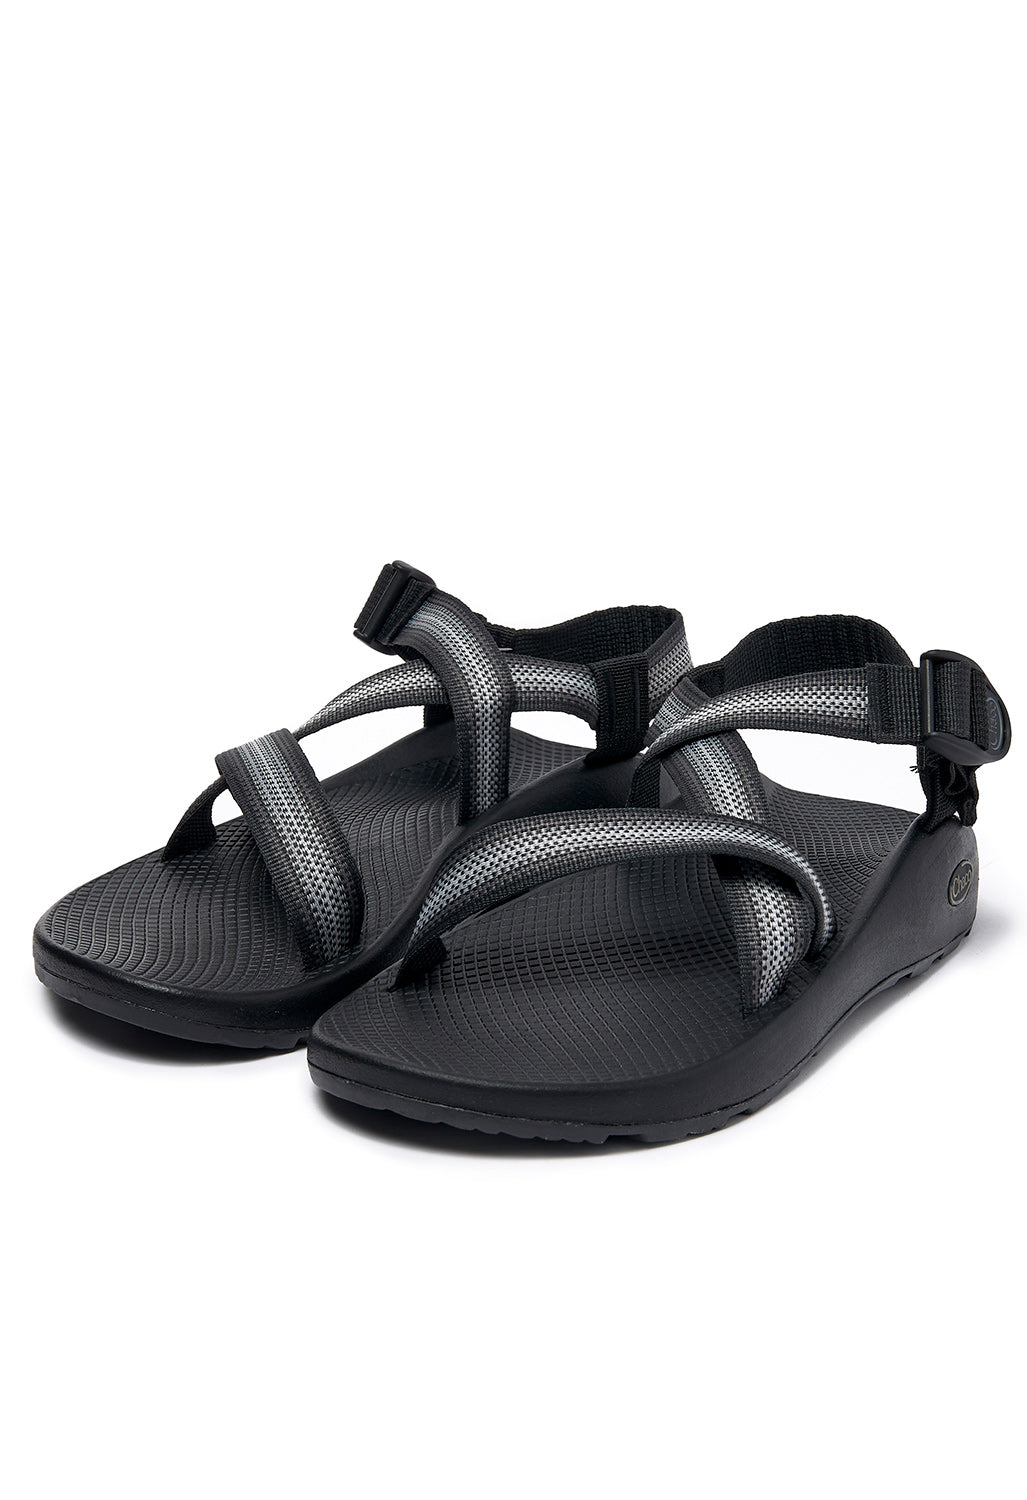 Chaco Men's Z1 Classic Sandals - Split Grey